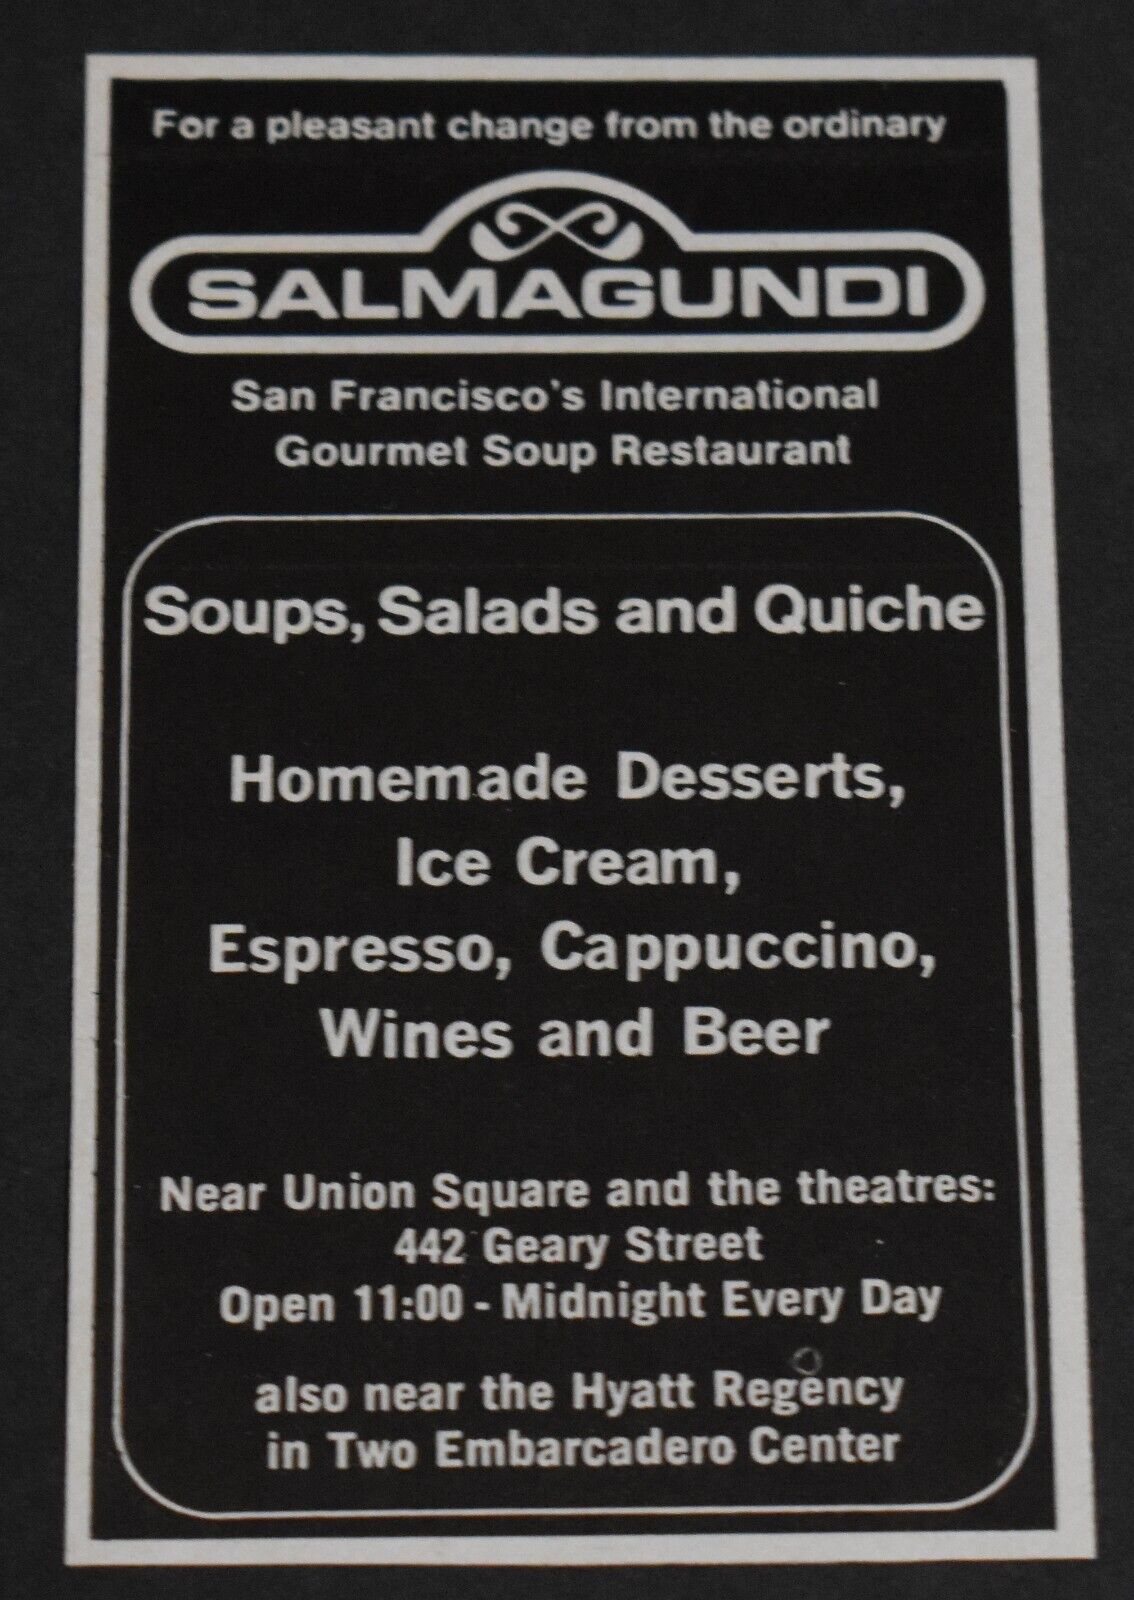 1979 Print Ad San Francisco Salmagundi Gourmet Soup Restaurant Salads Quiche art